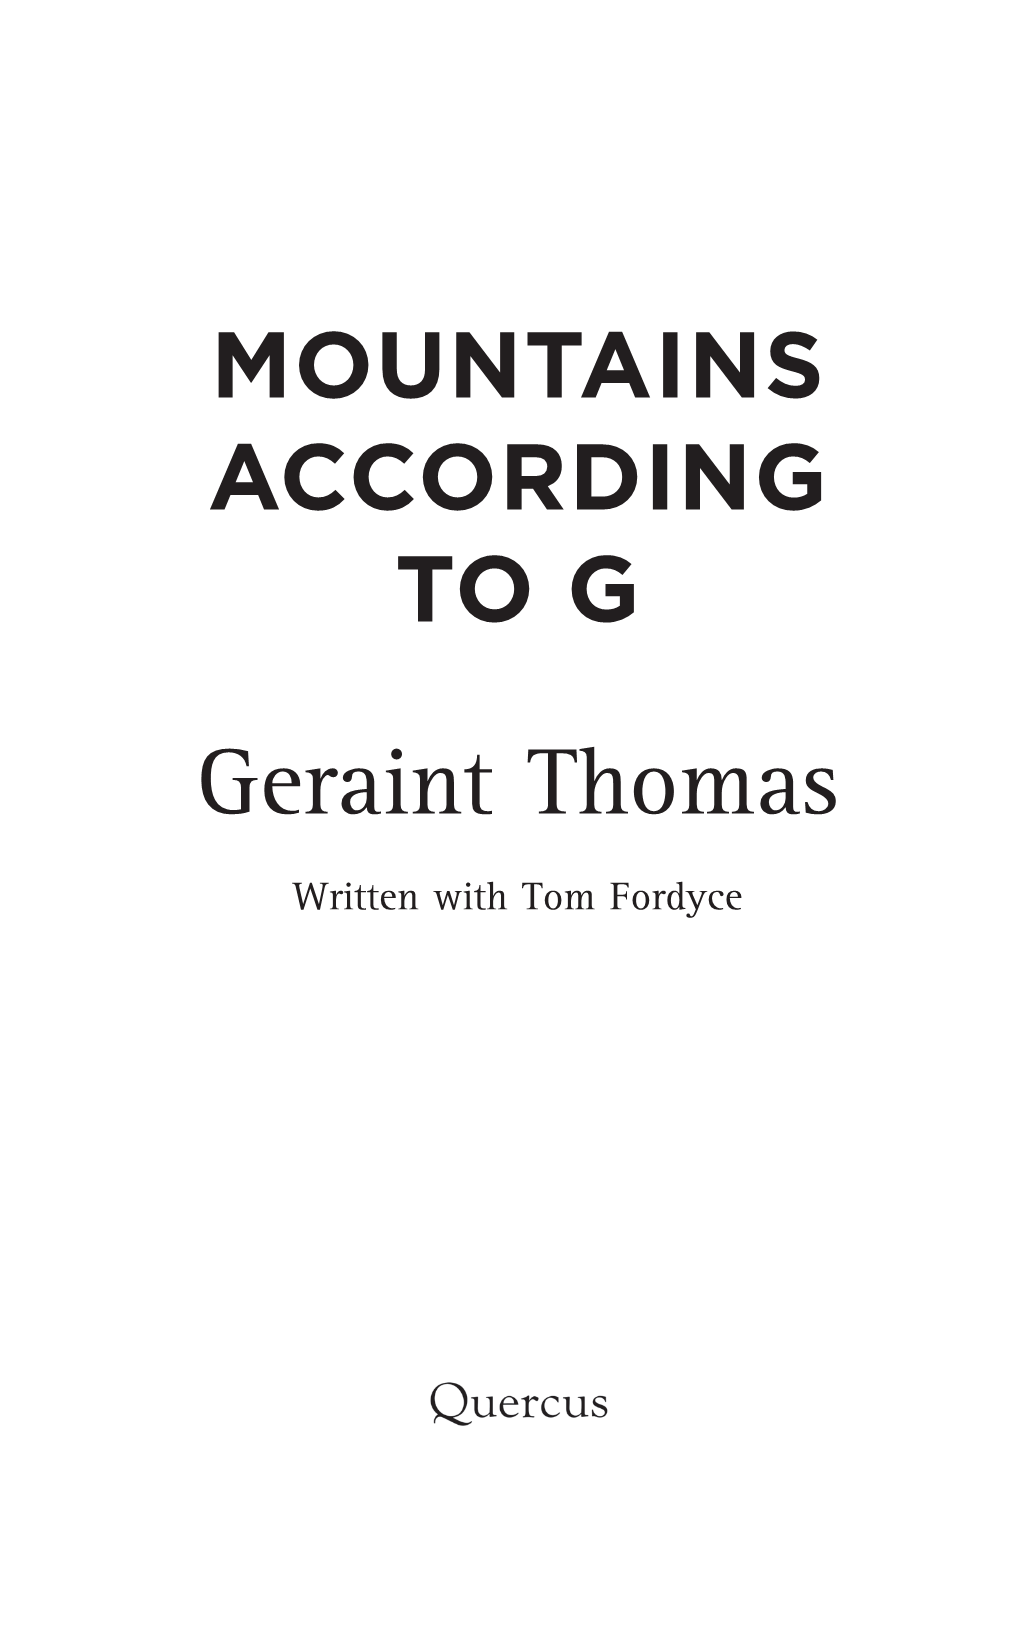 Geraint Thomas Written with Tom Fordyce